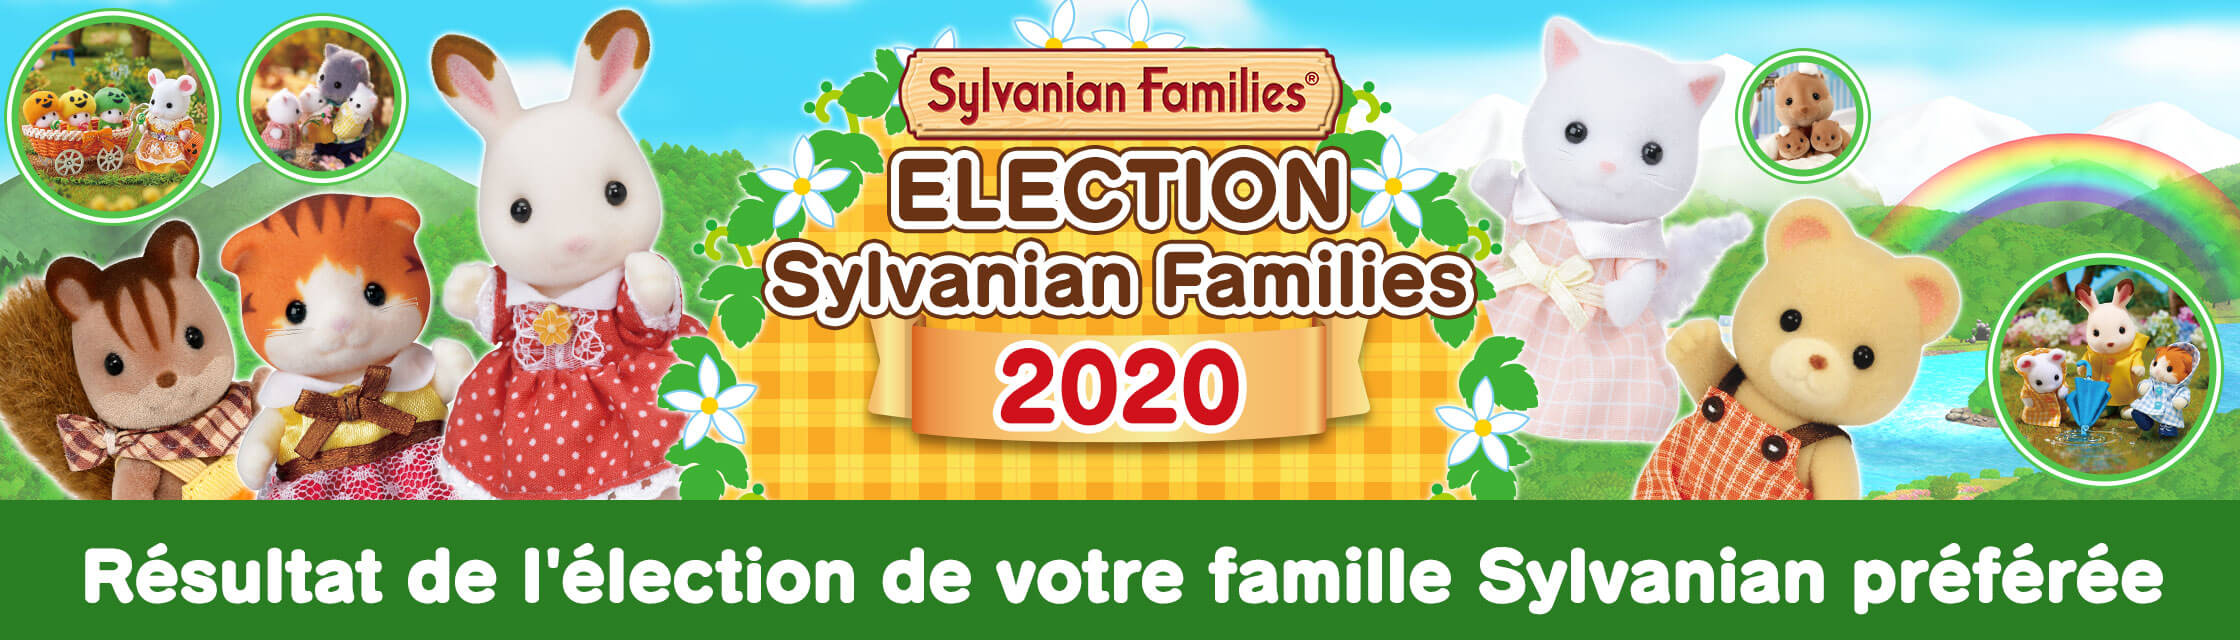 Election Sylvanian Families